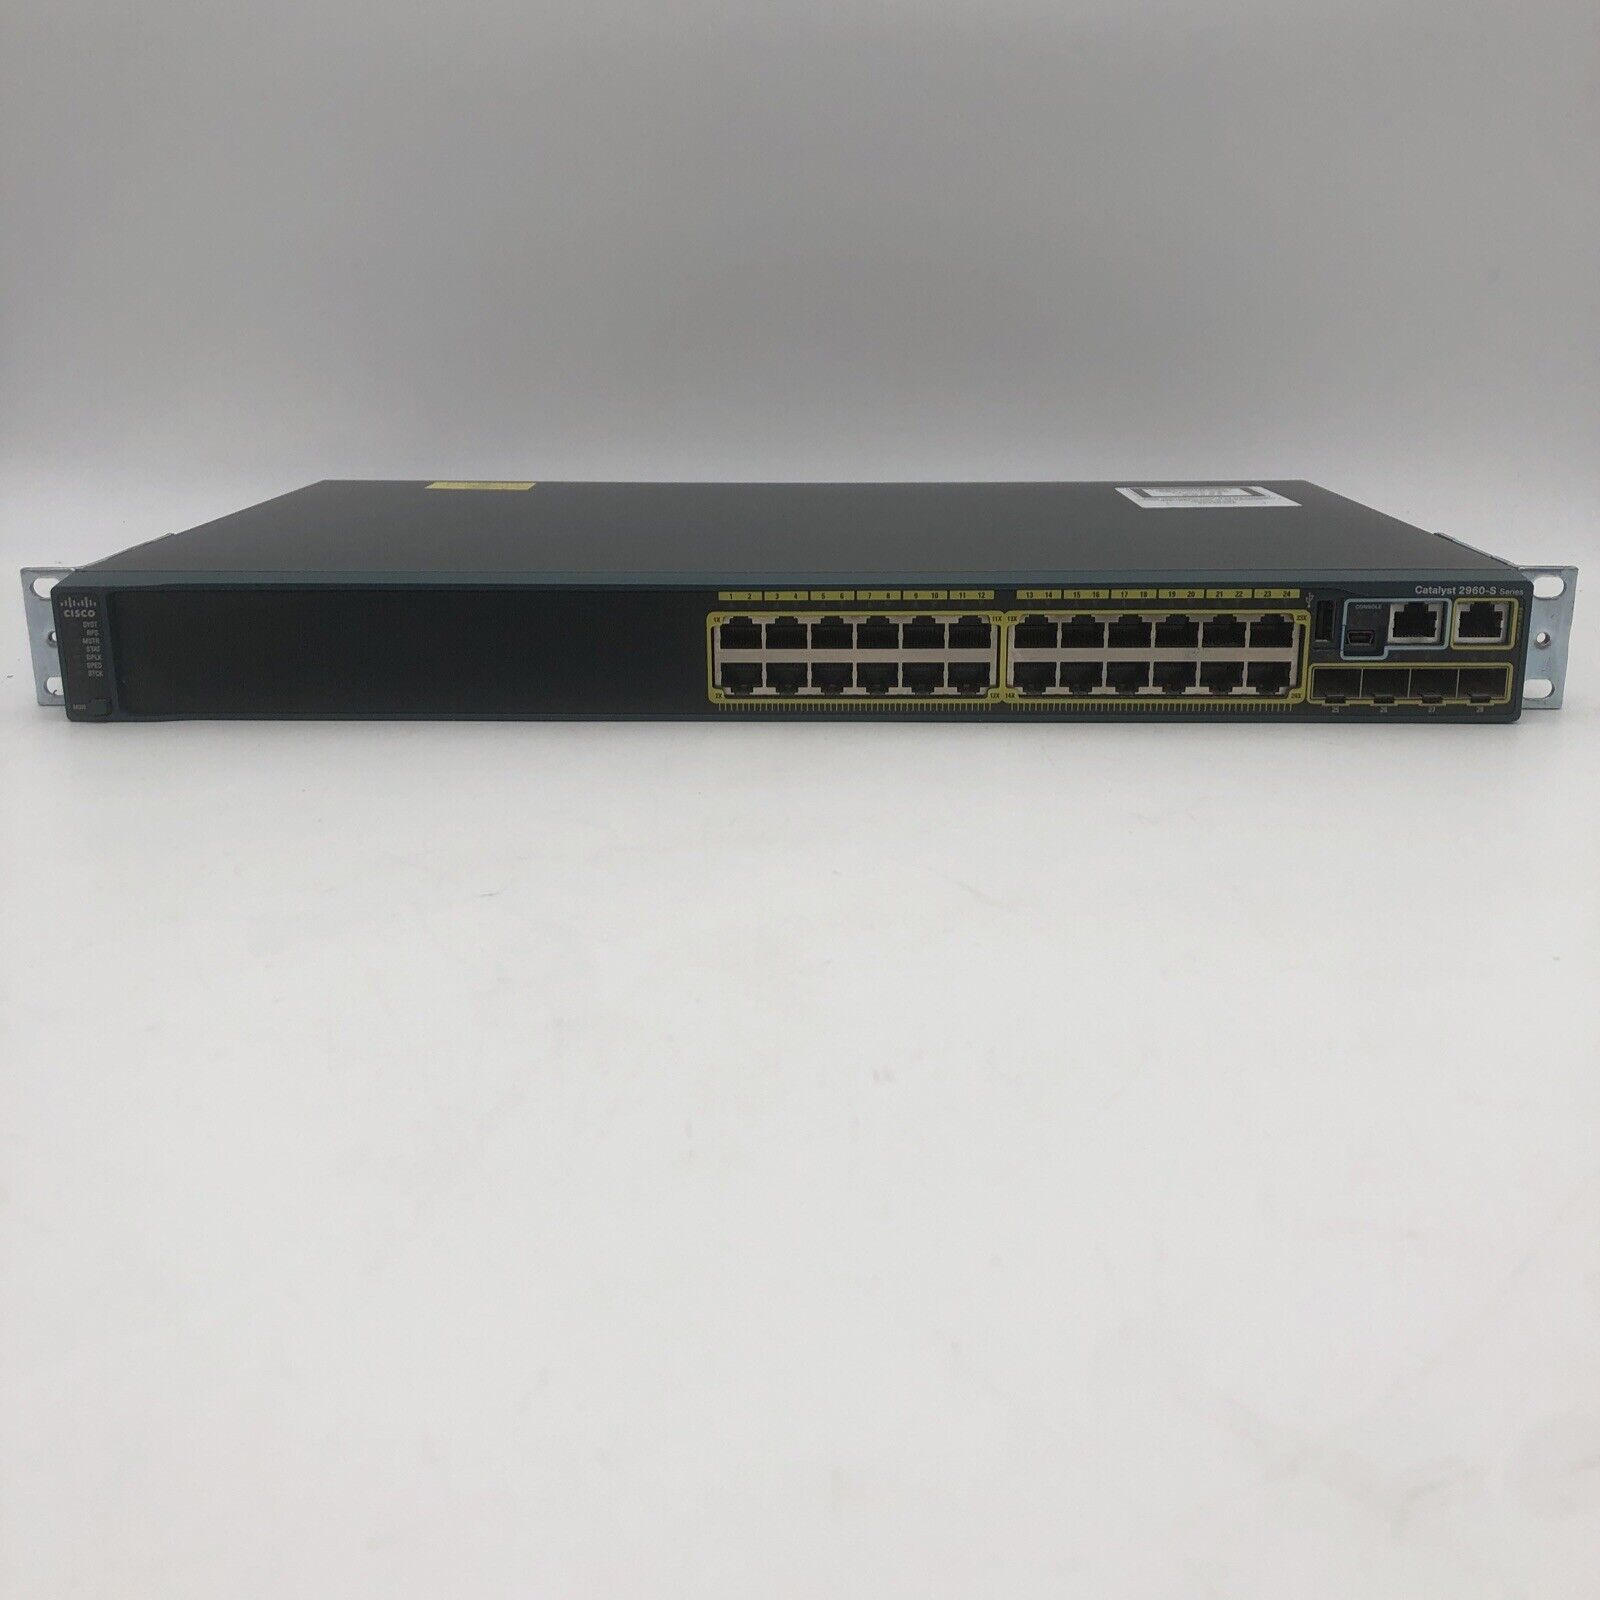 USED Cisco Catalyst 2960-S Series Gigabit Switch 48-Port WS-C2960S-24TS-L   READ